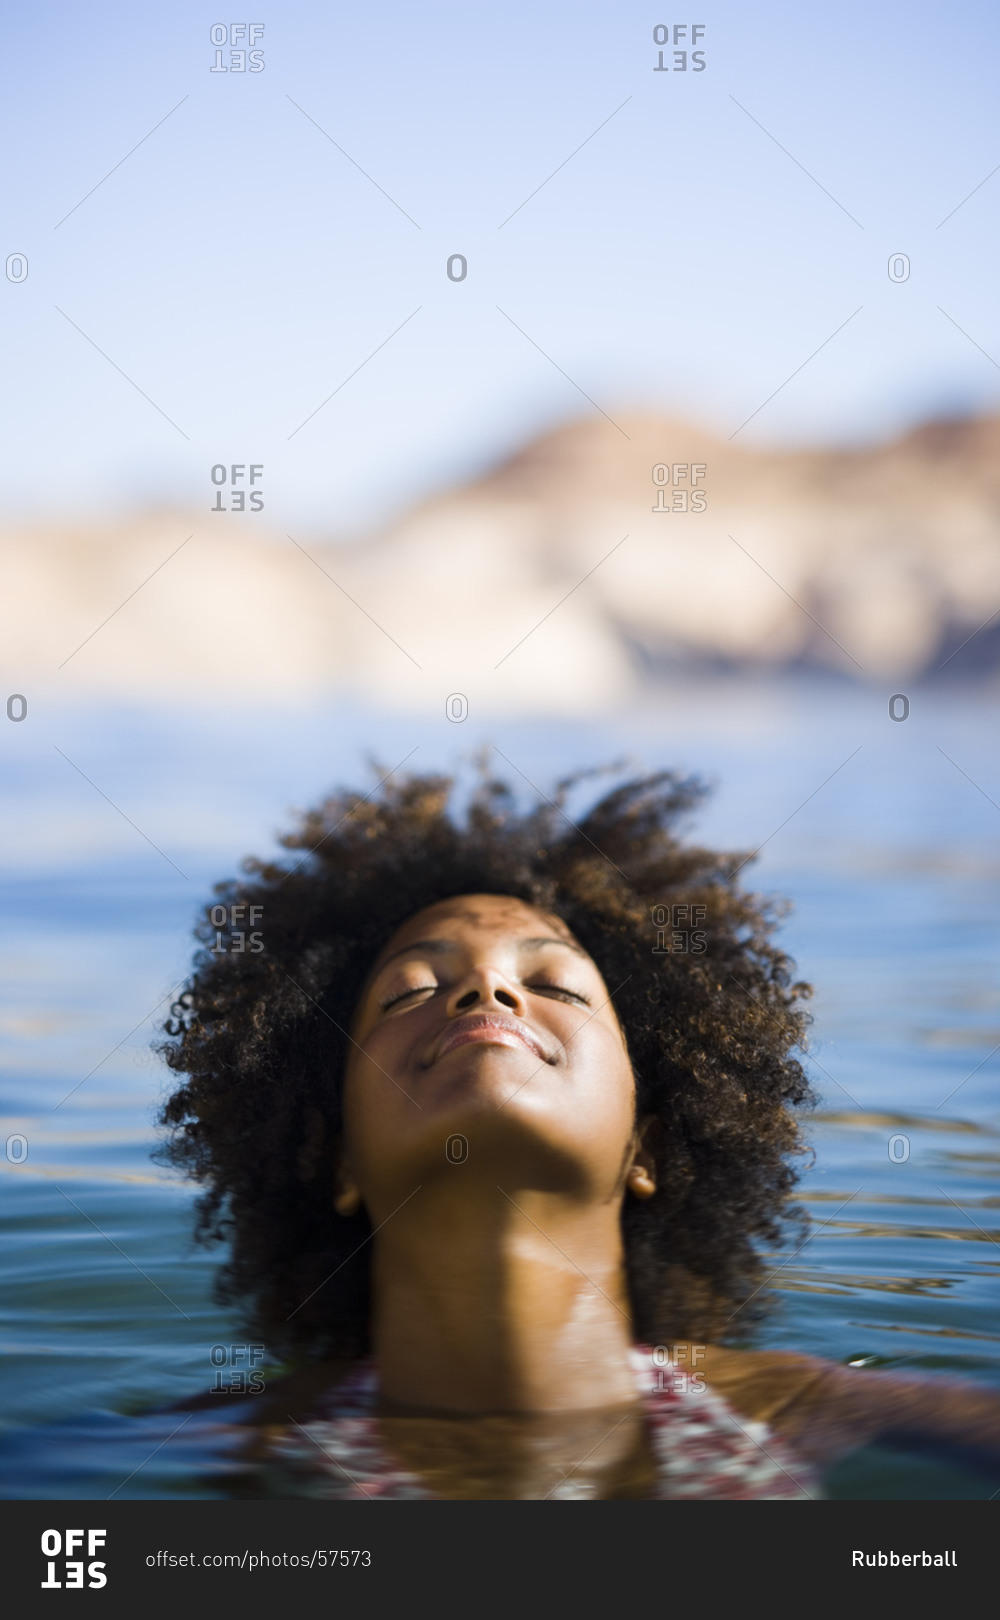 Woman relaxing in water